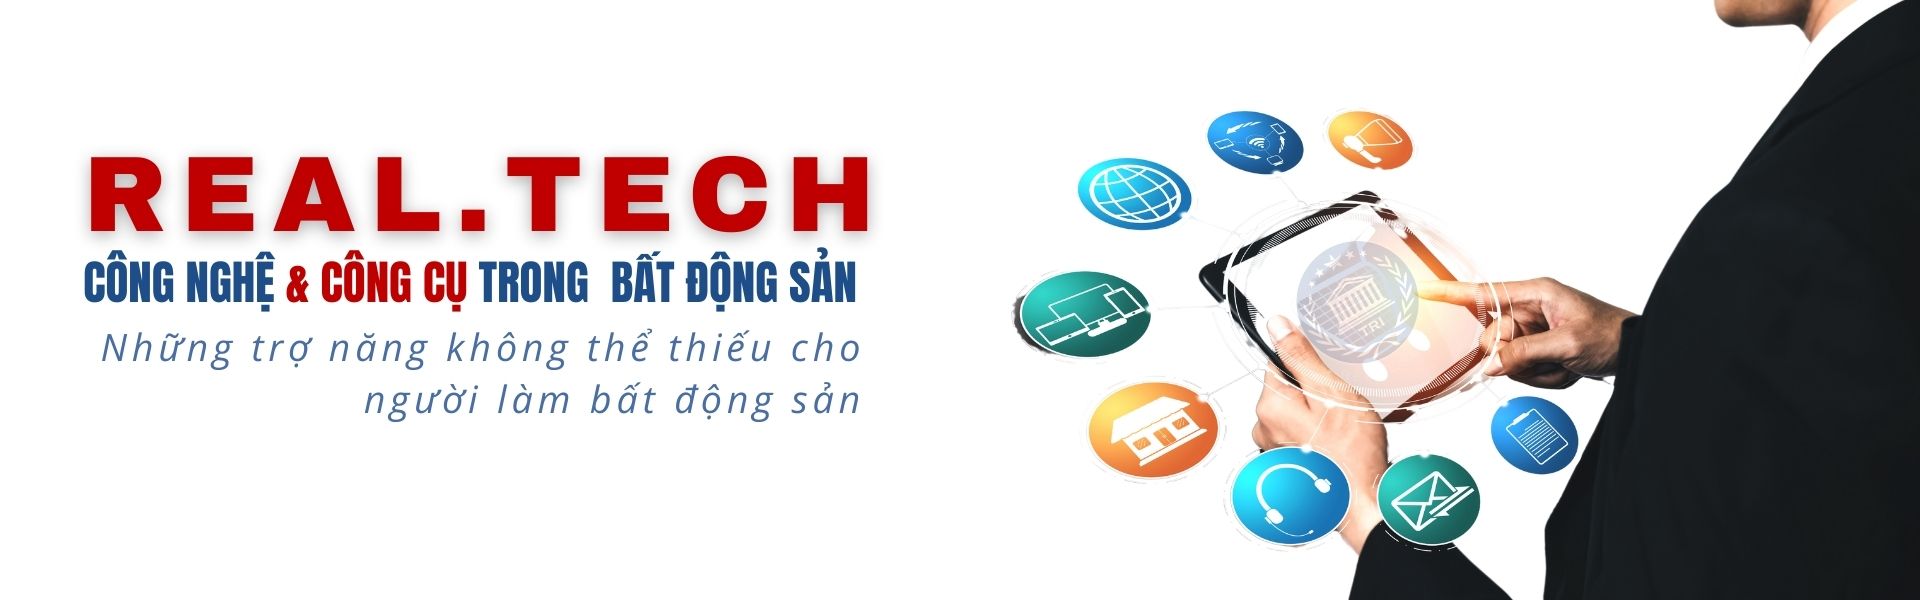 Cong Cu Cong Nghe Trong Bat Dong San Real.Tech